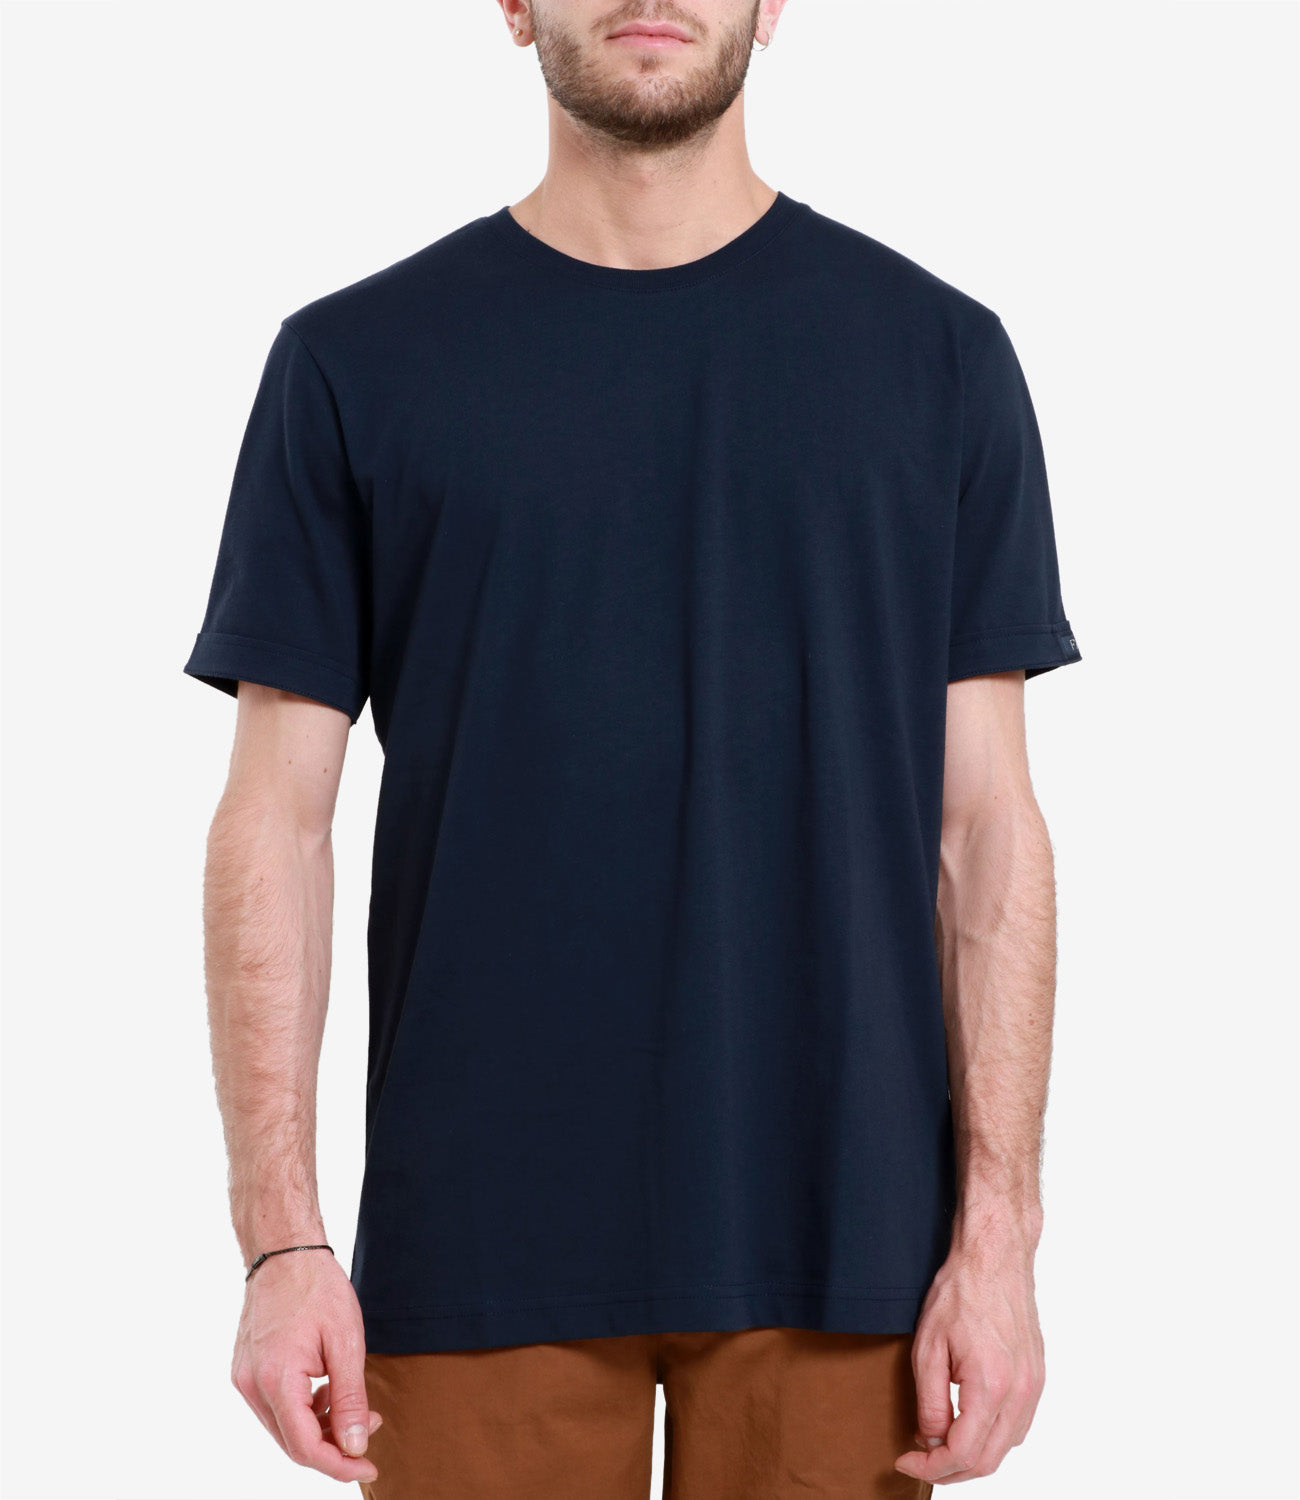 Fay | Navy Blue T-Shirt